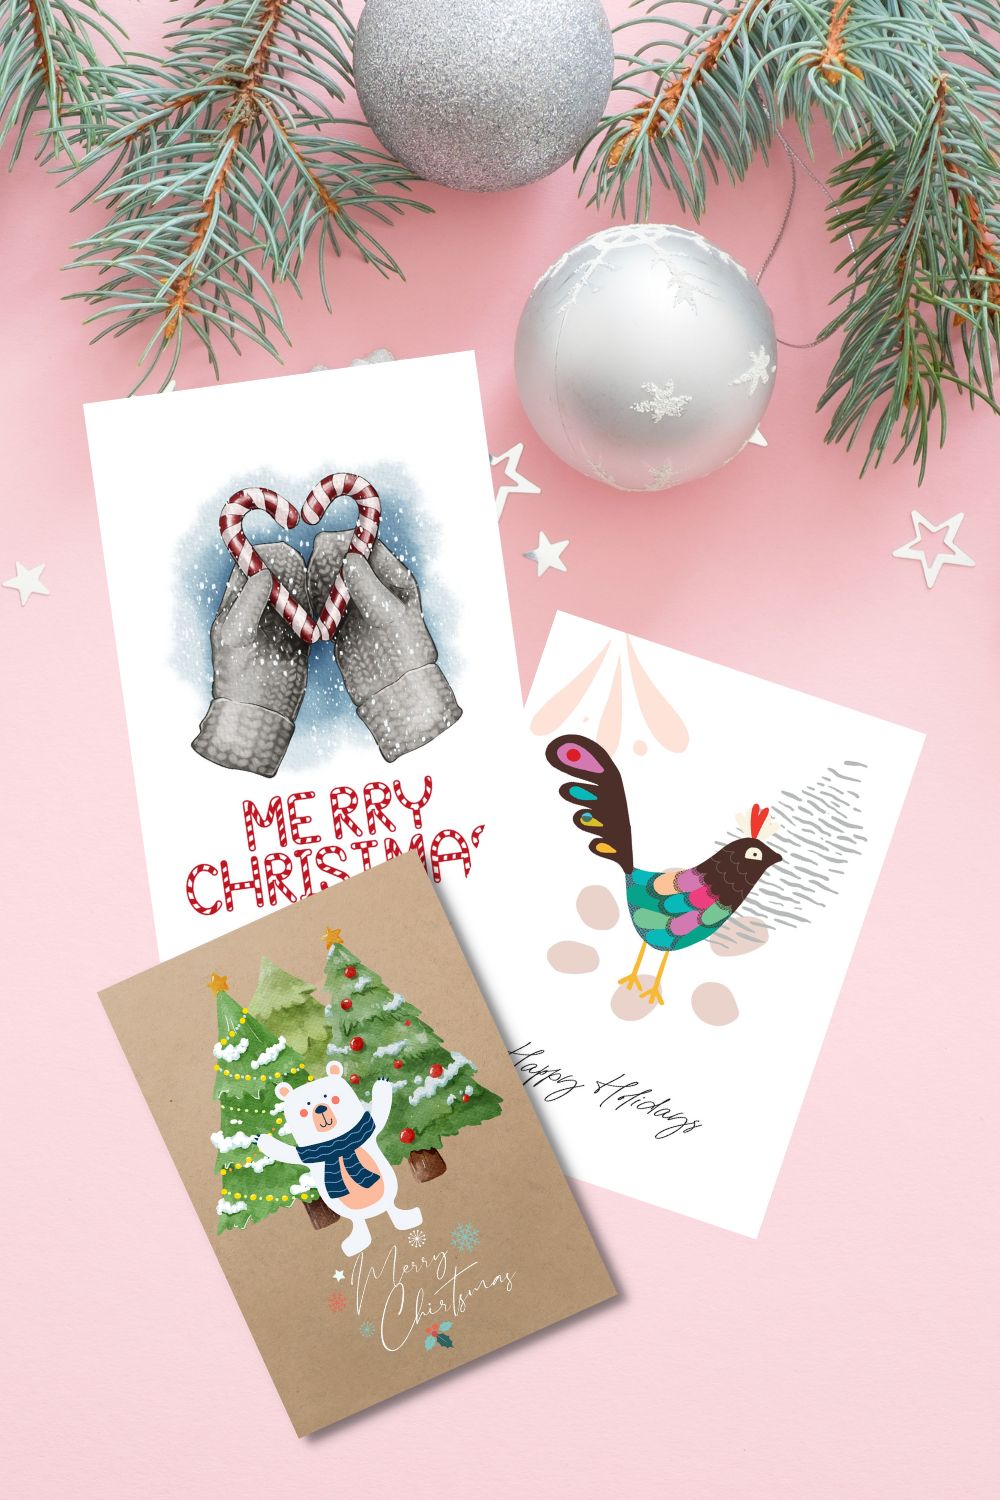 Free Christmas Cards Design pinterest image.